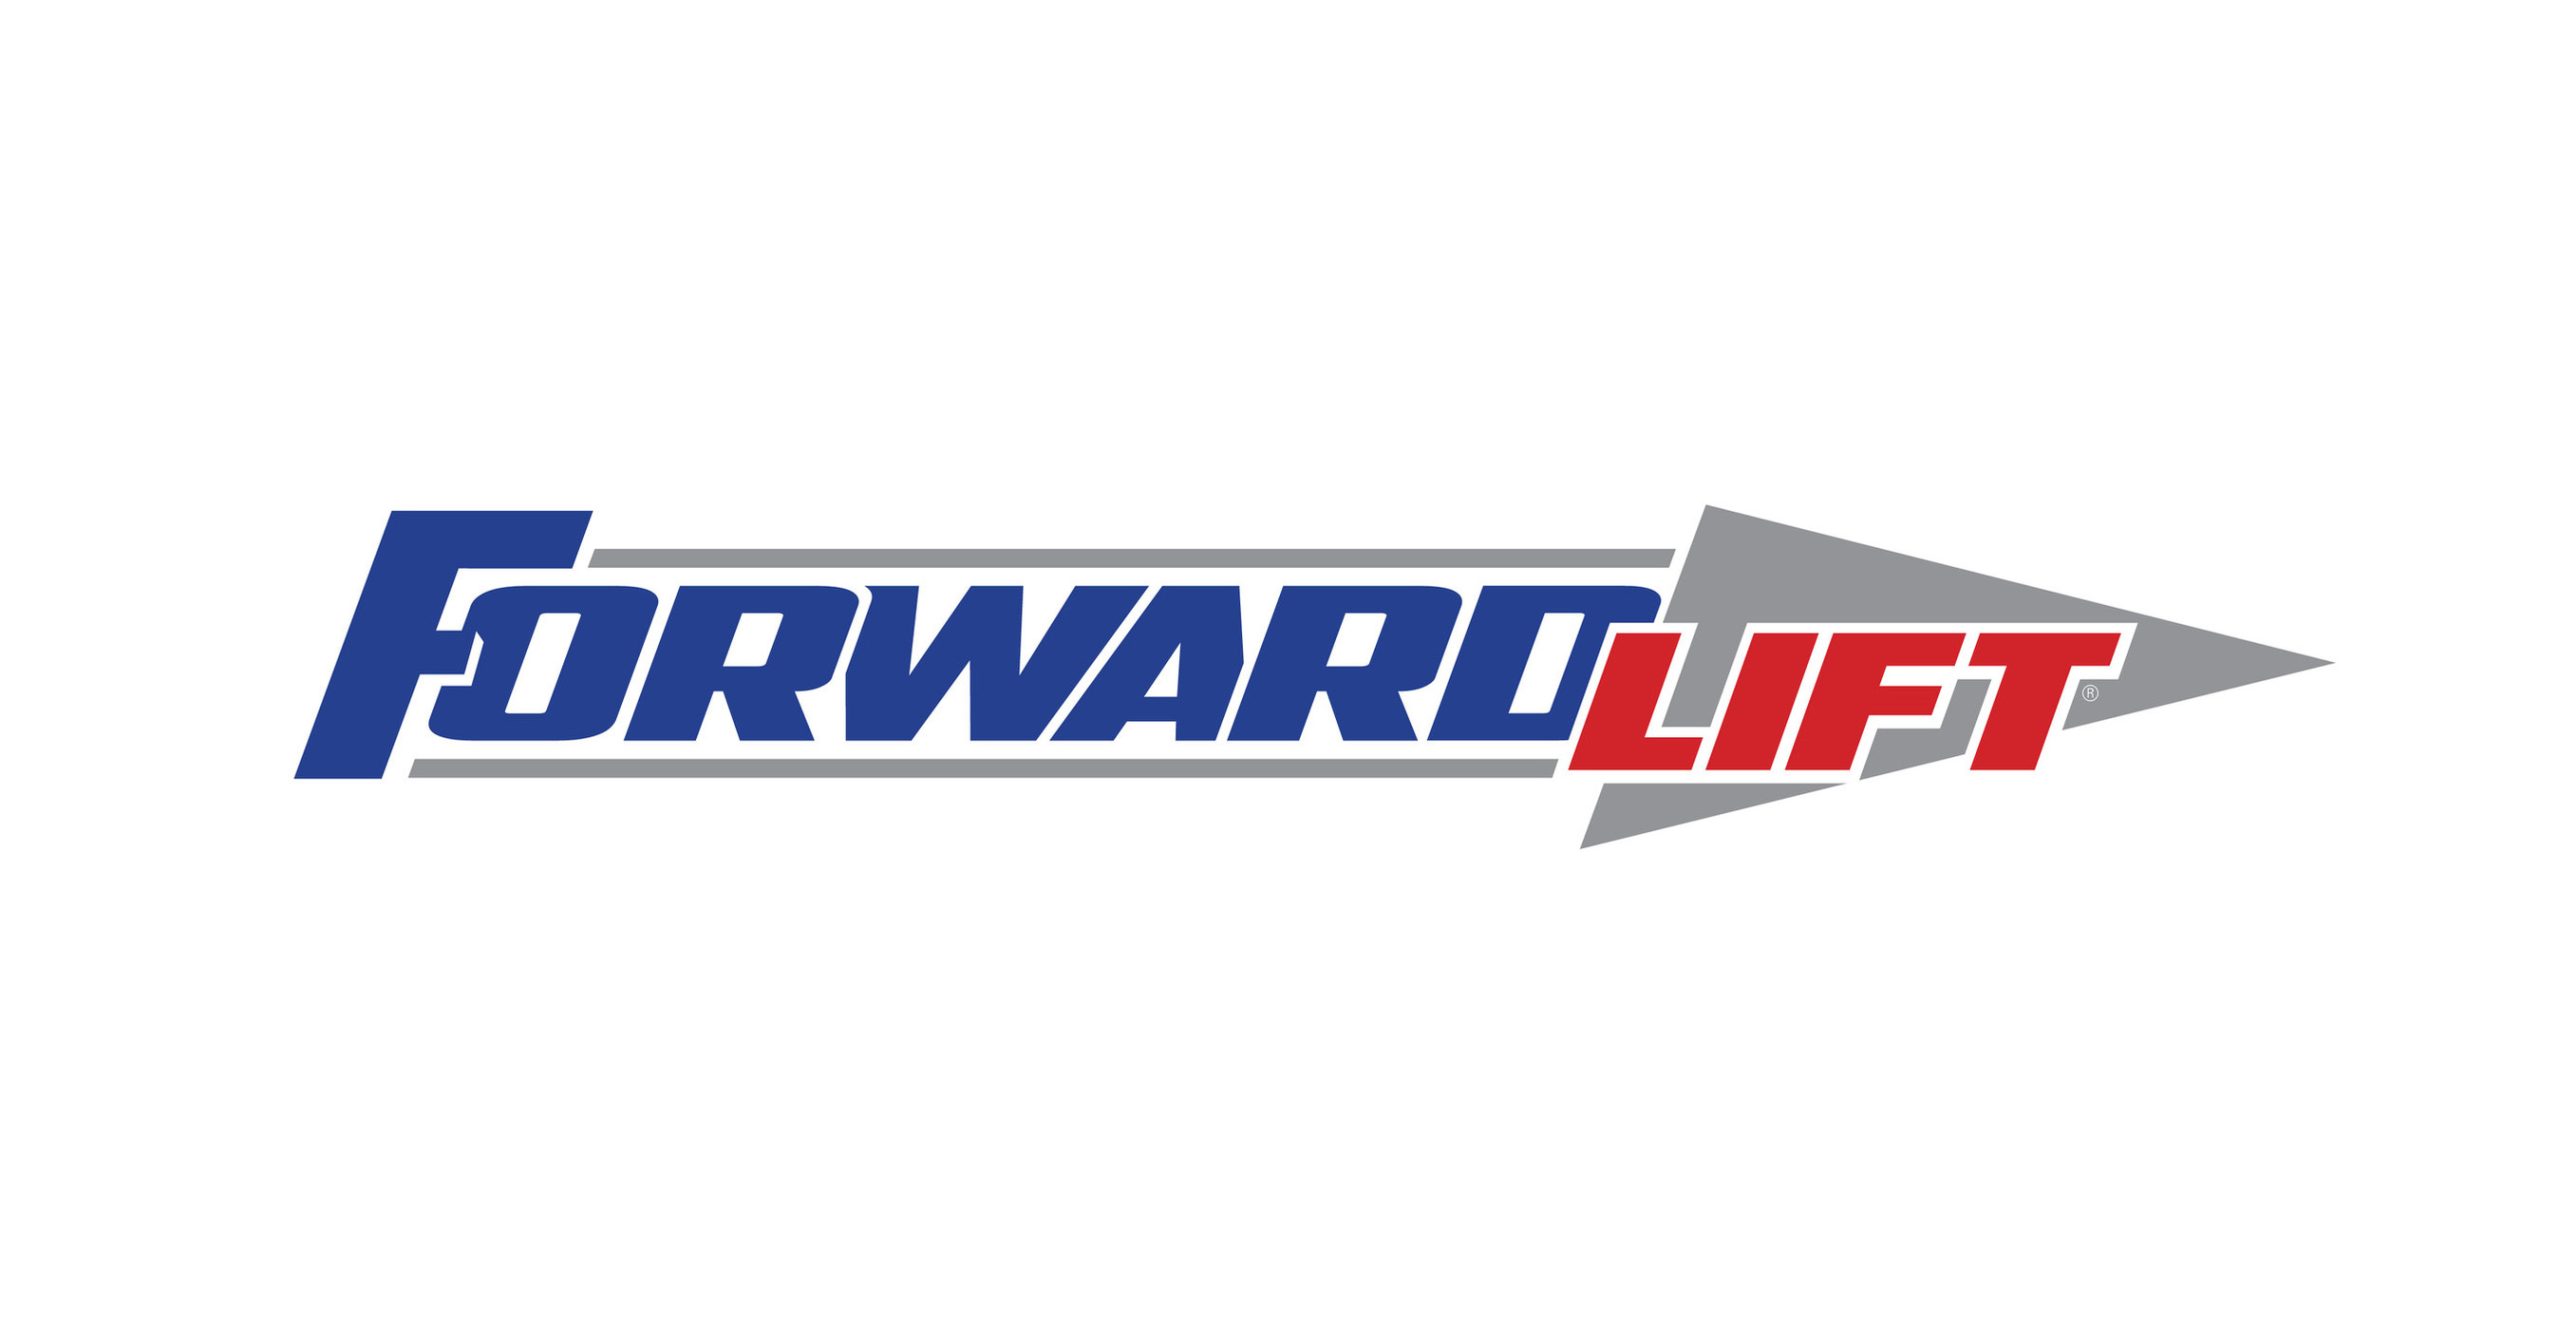 Forward Lift Scaled